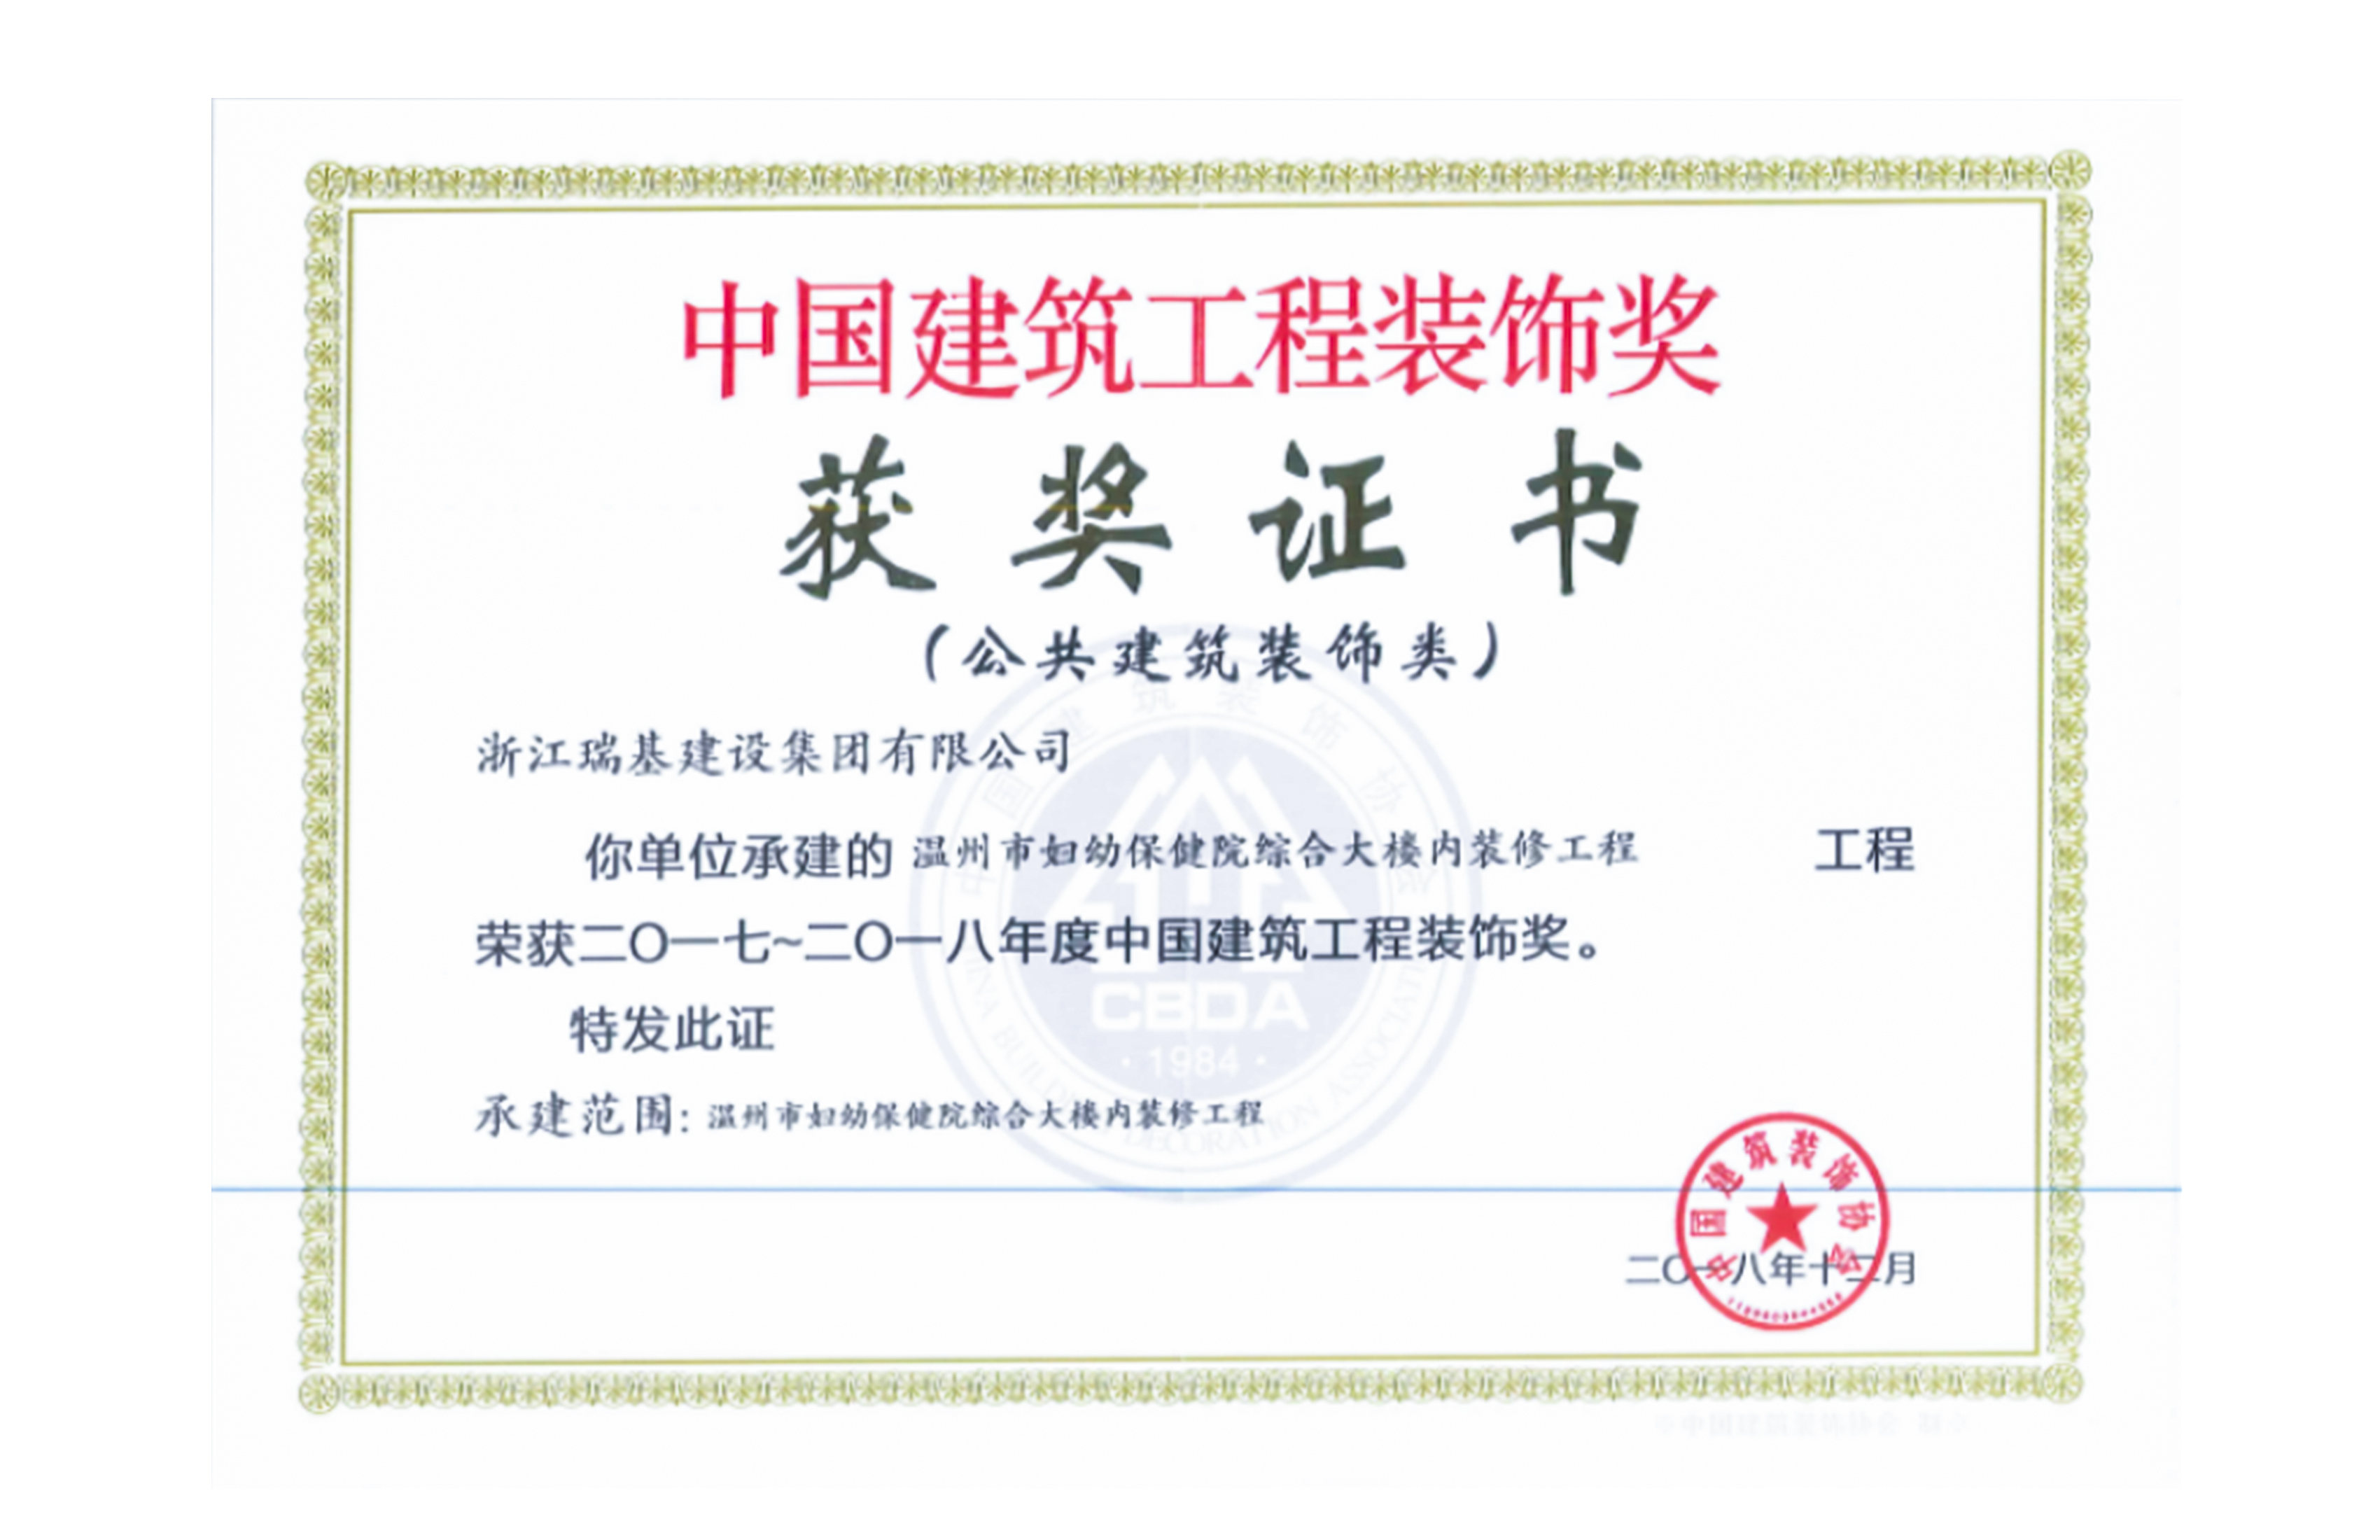 China Construction Engineering Decoration Award (public building decoration category)